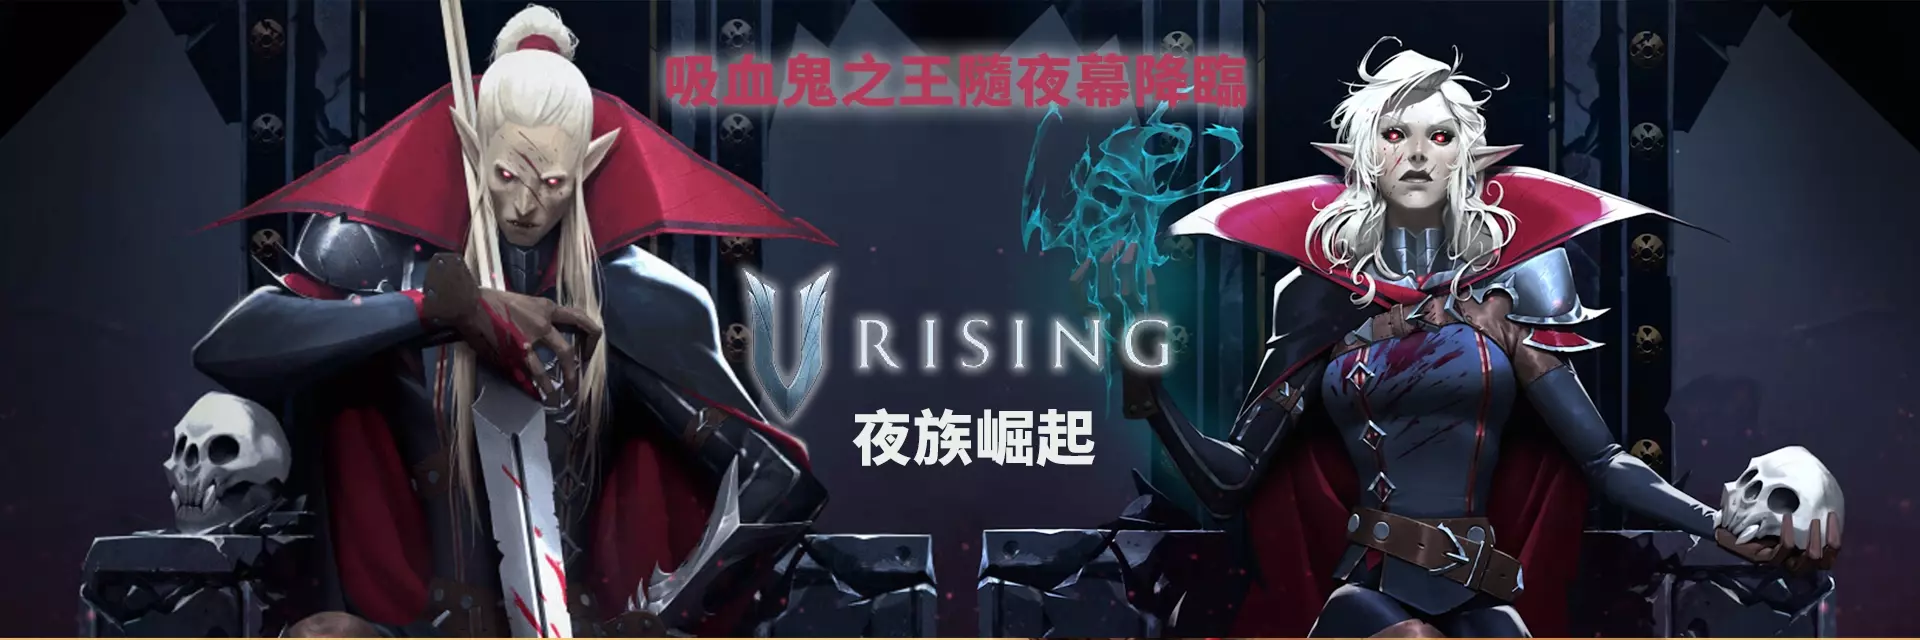 夜族崛起 V Rising（1.0 update）